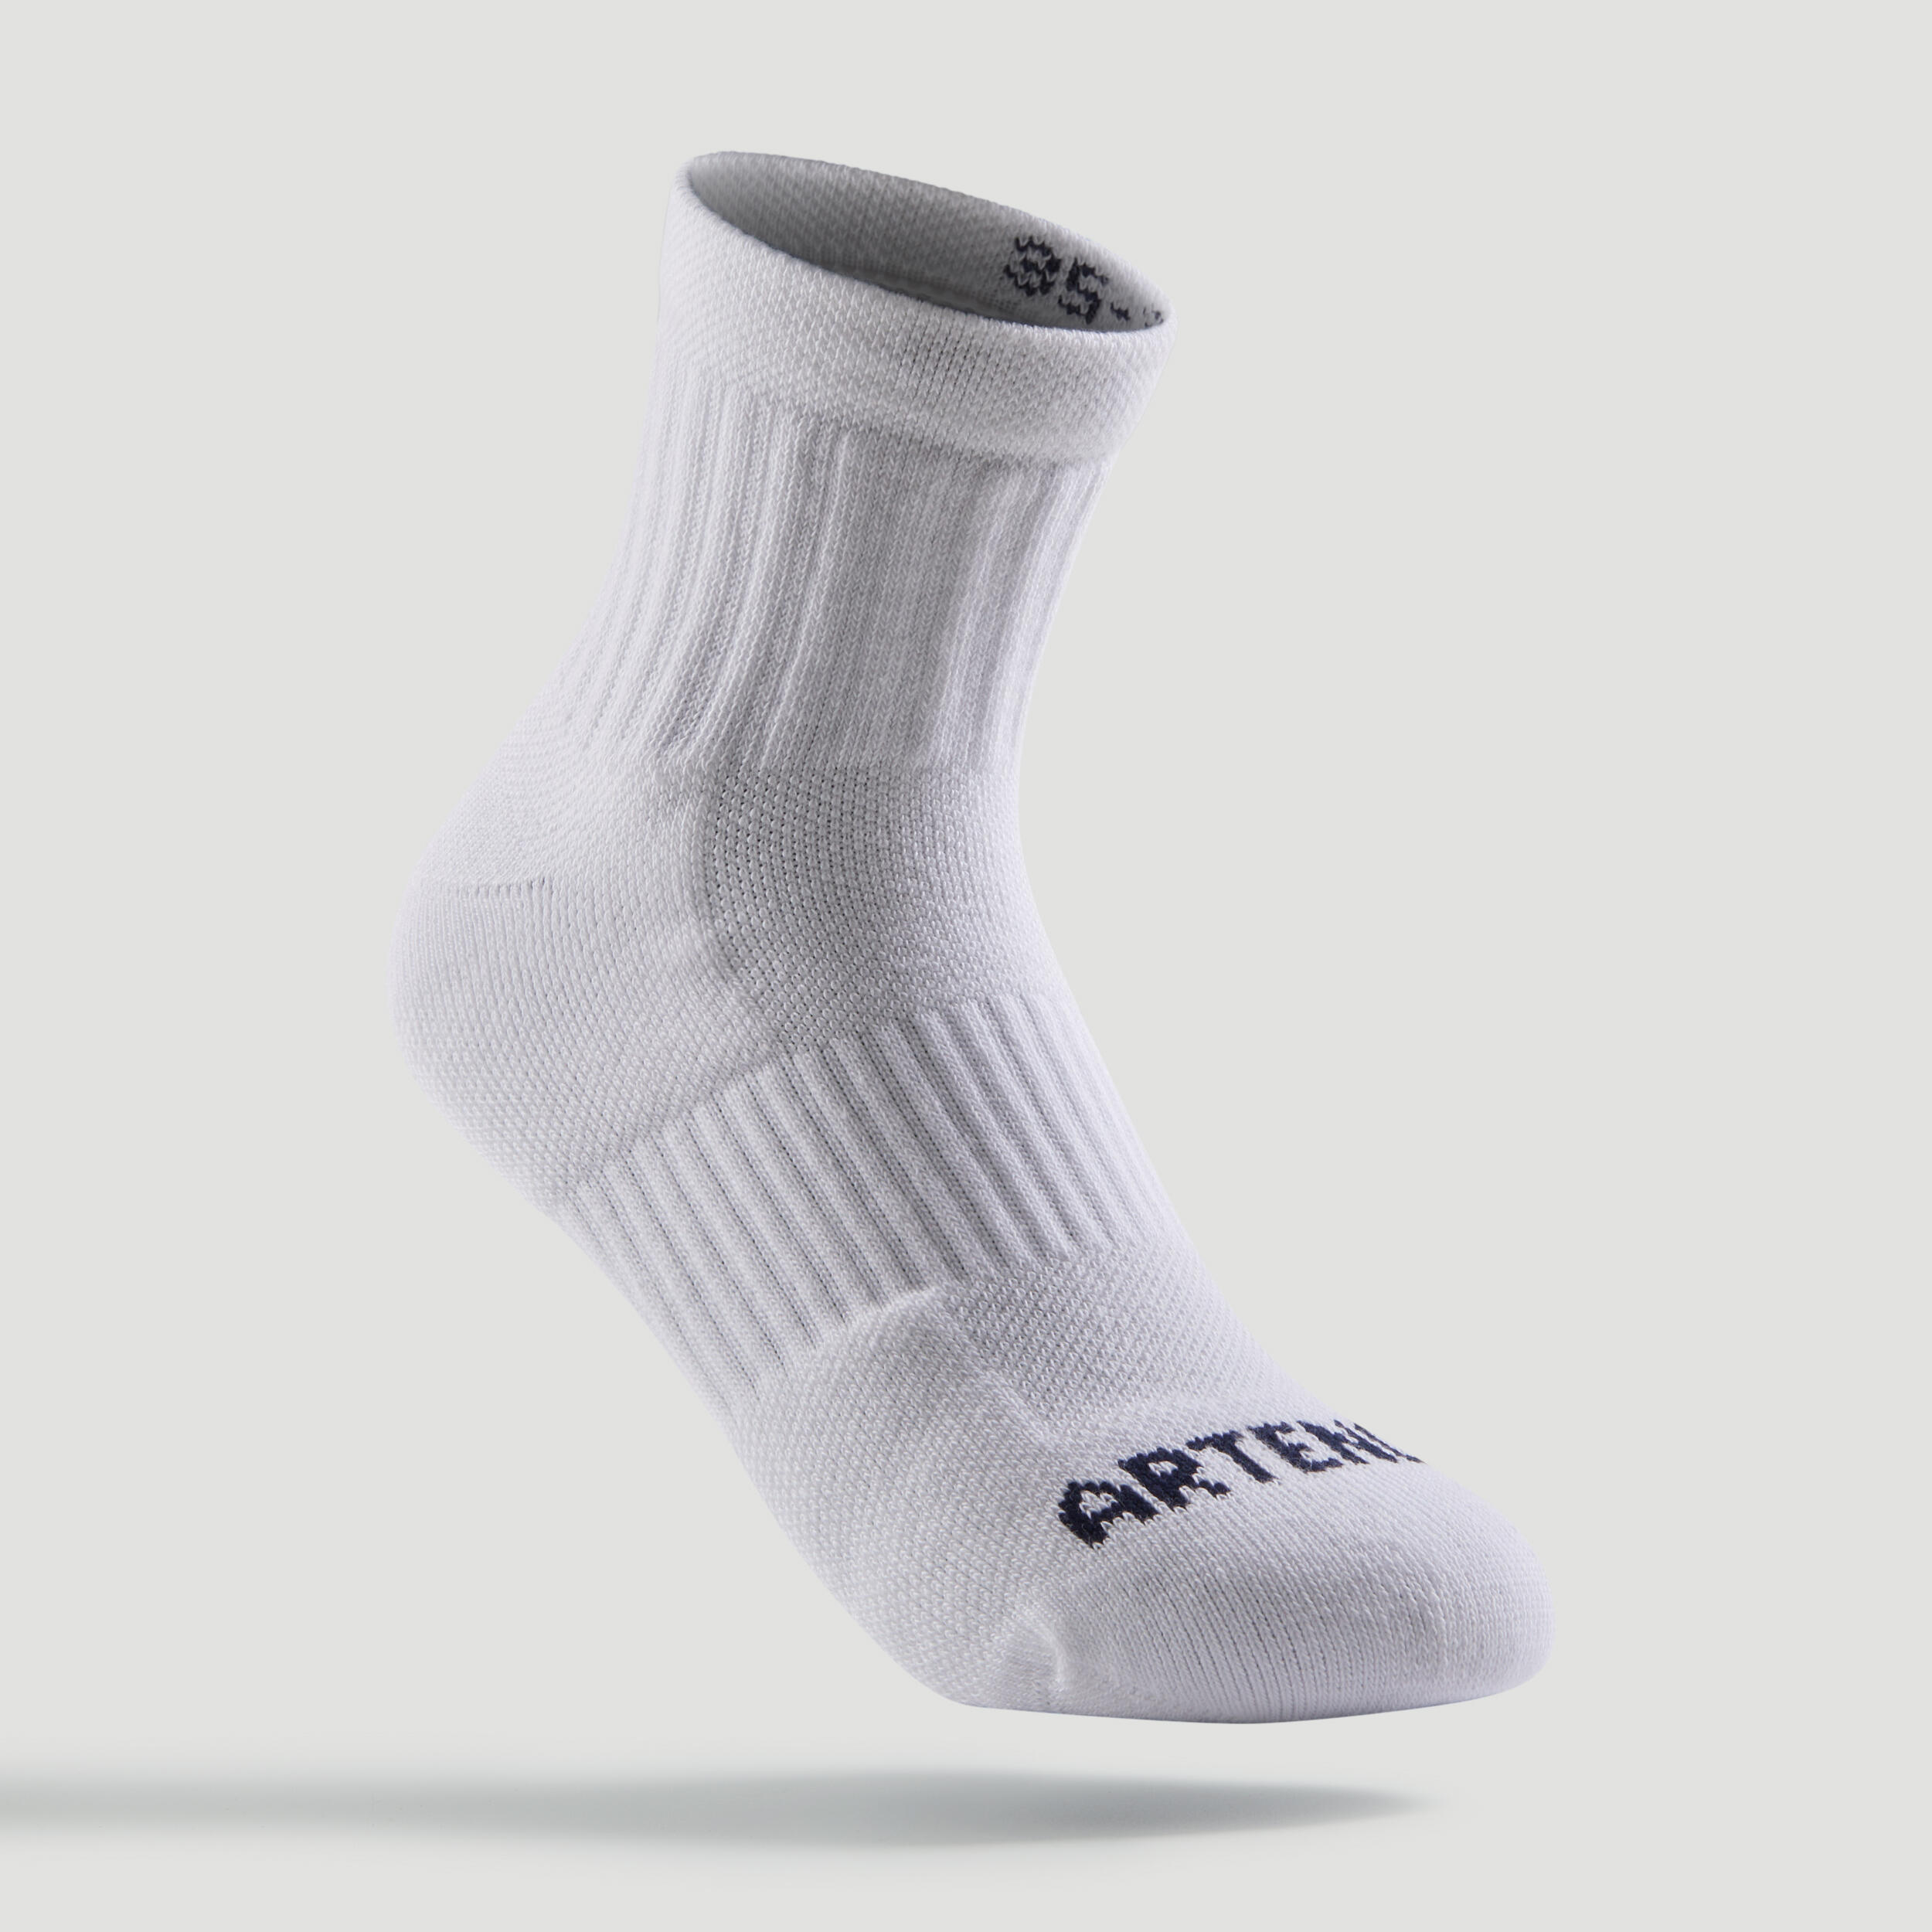 Decathlon Breathable Pilates Grip Socks (Size 43-46) x 2